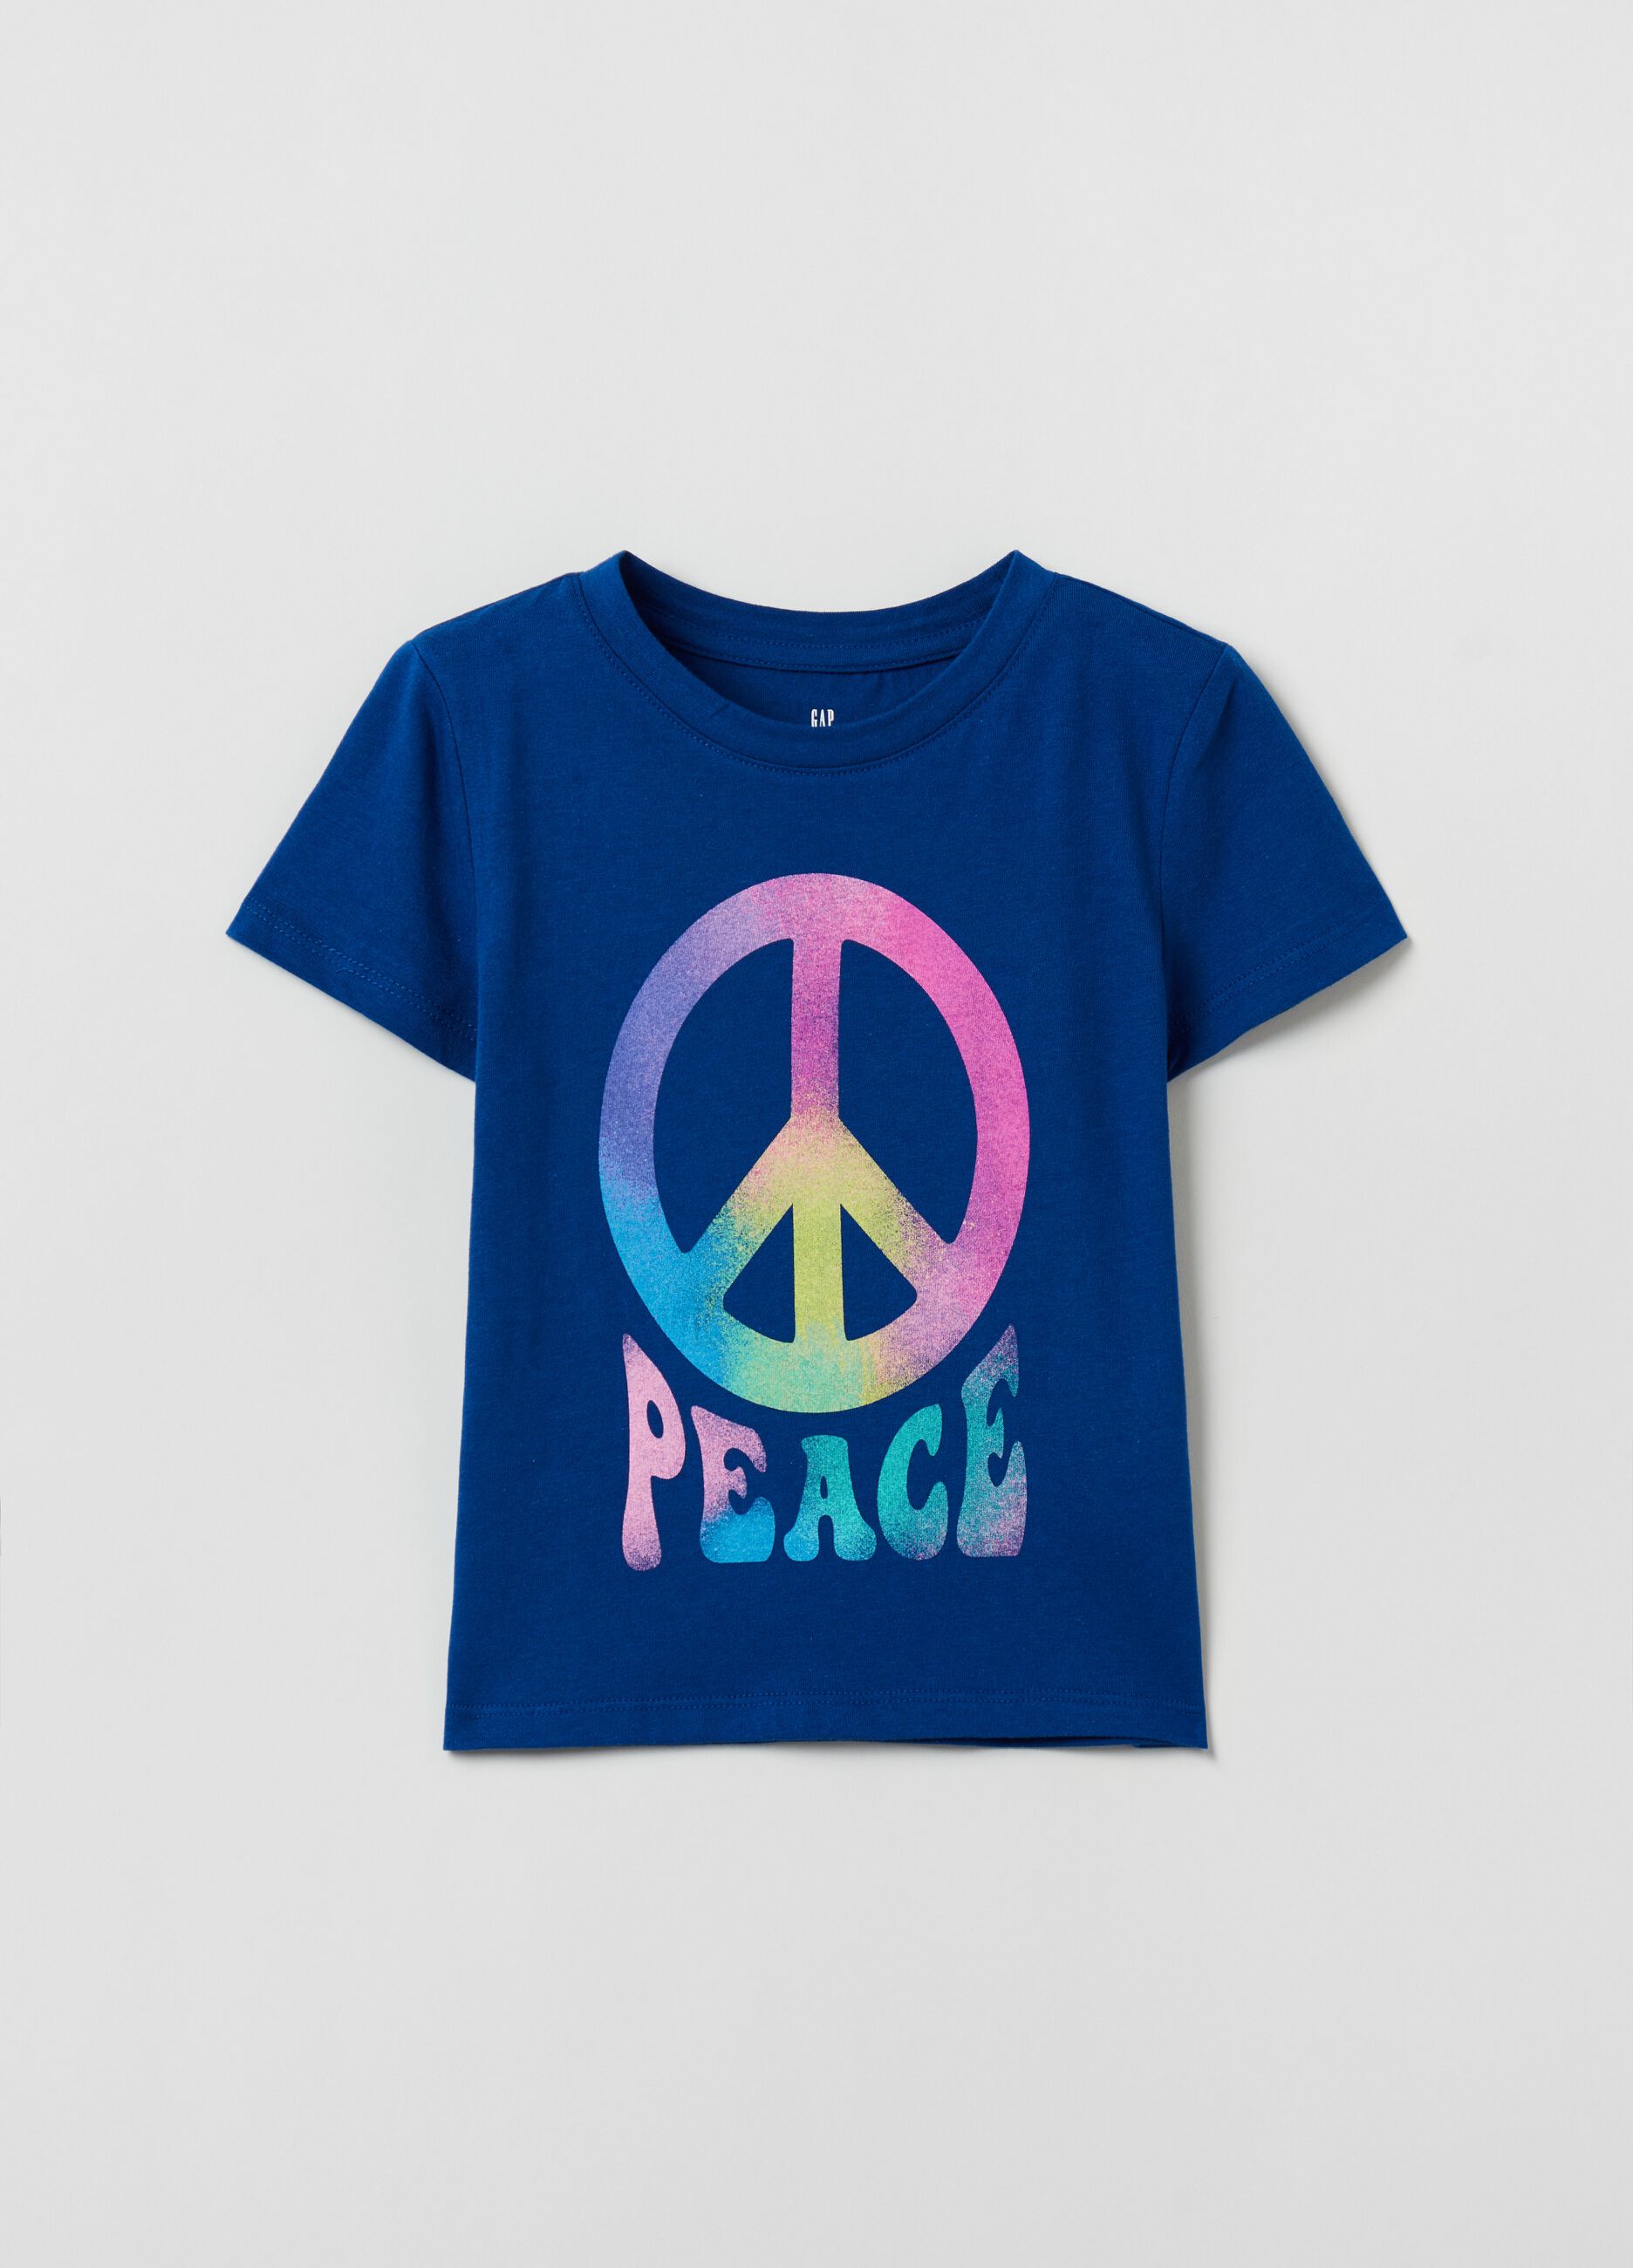 T-shirt in cotone con stampa peace